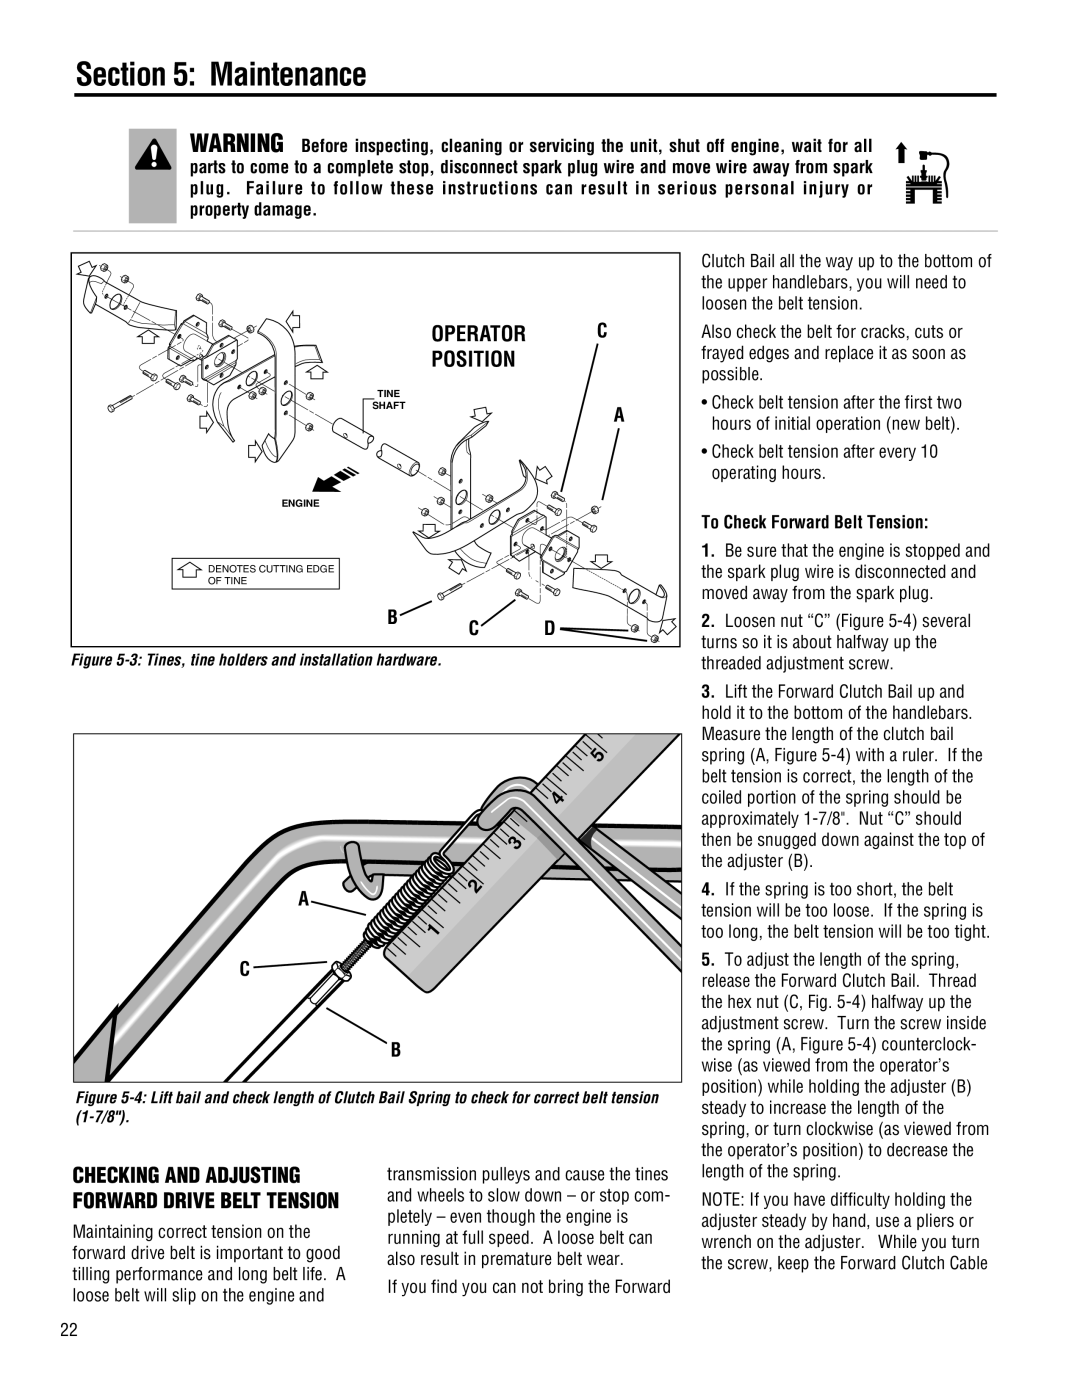 Troy-Bilt 645A-Bronco manual Position, Operator, To Check Forward Belt Tension, Maintenance 